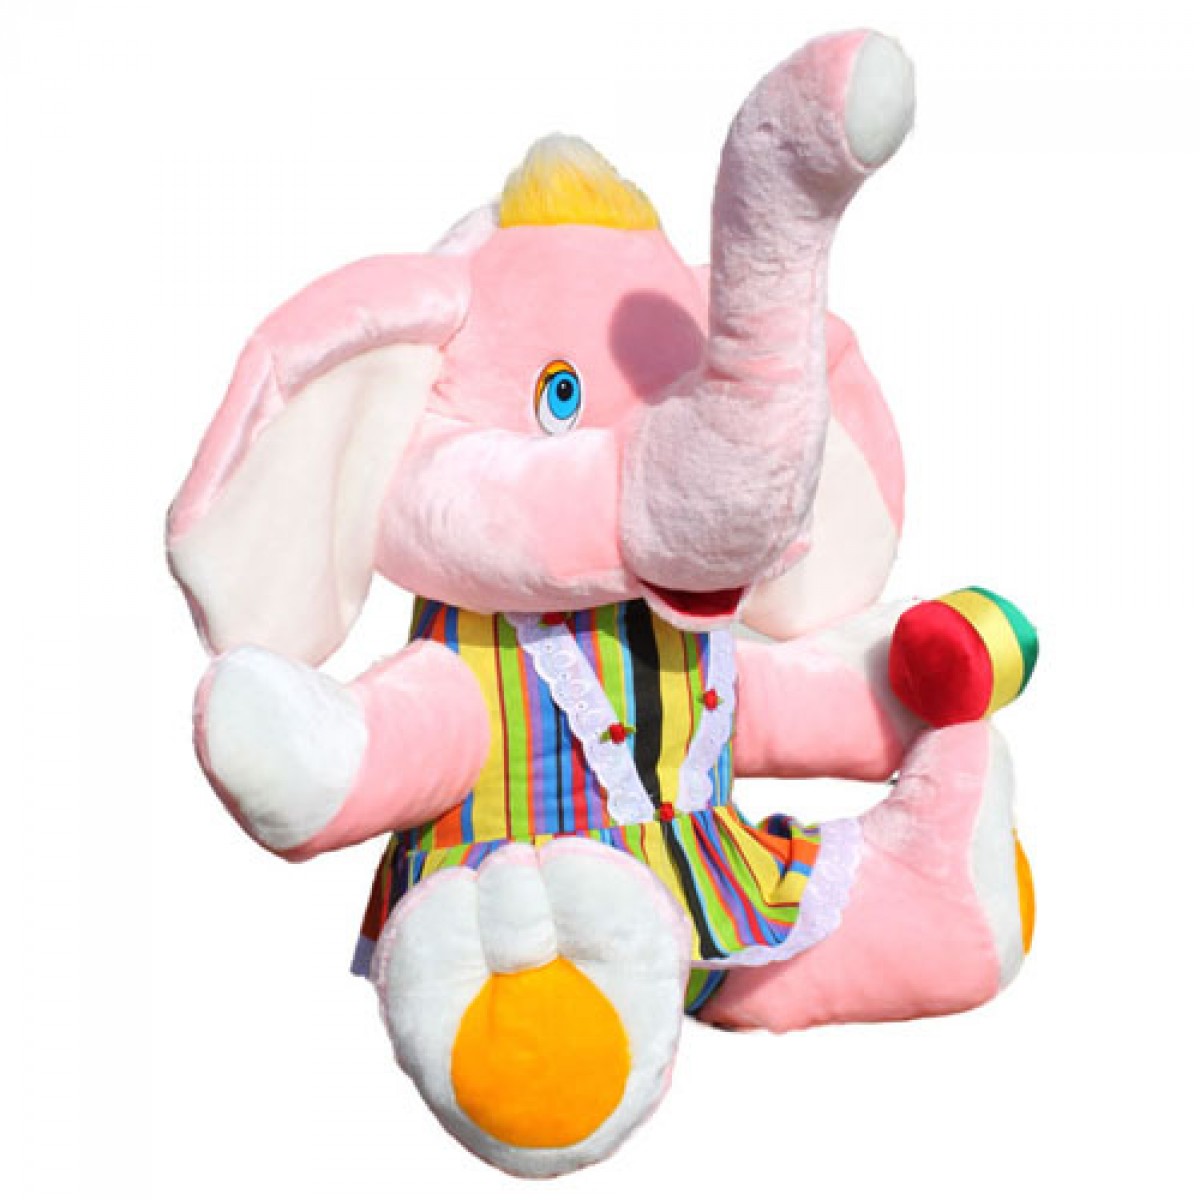 Игрушка слон купить. Мягкая игрушка слон. Большие мягкие игрушки слон. Игрушка "Слоник". Розовый Слоник мягкая игрушка.